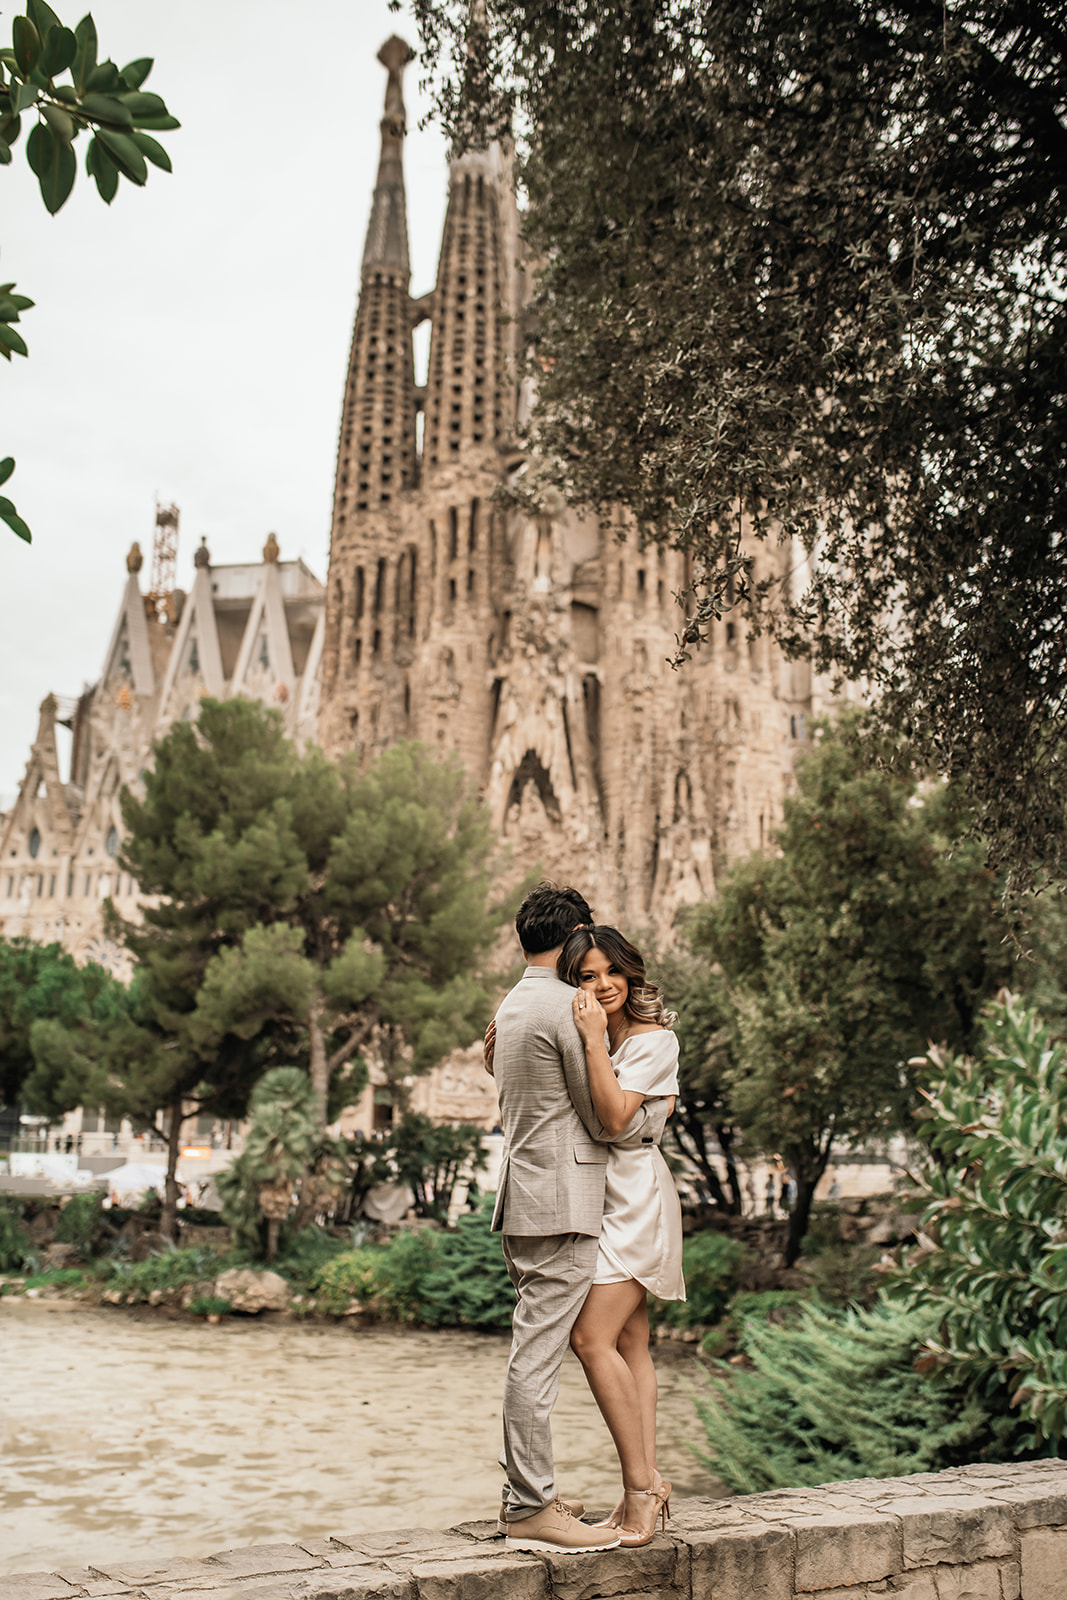 Photoshoot Locations in Barcelona